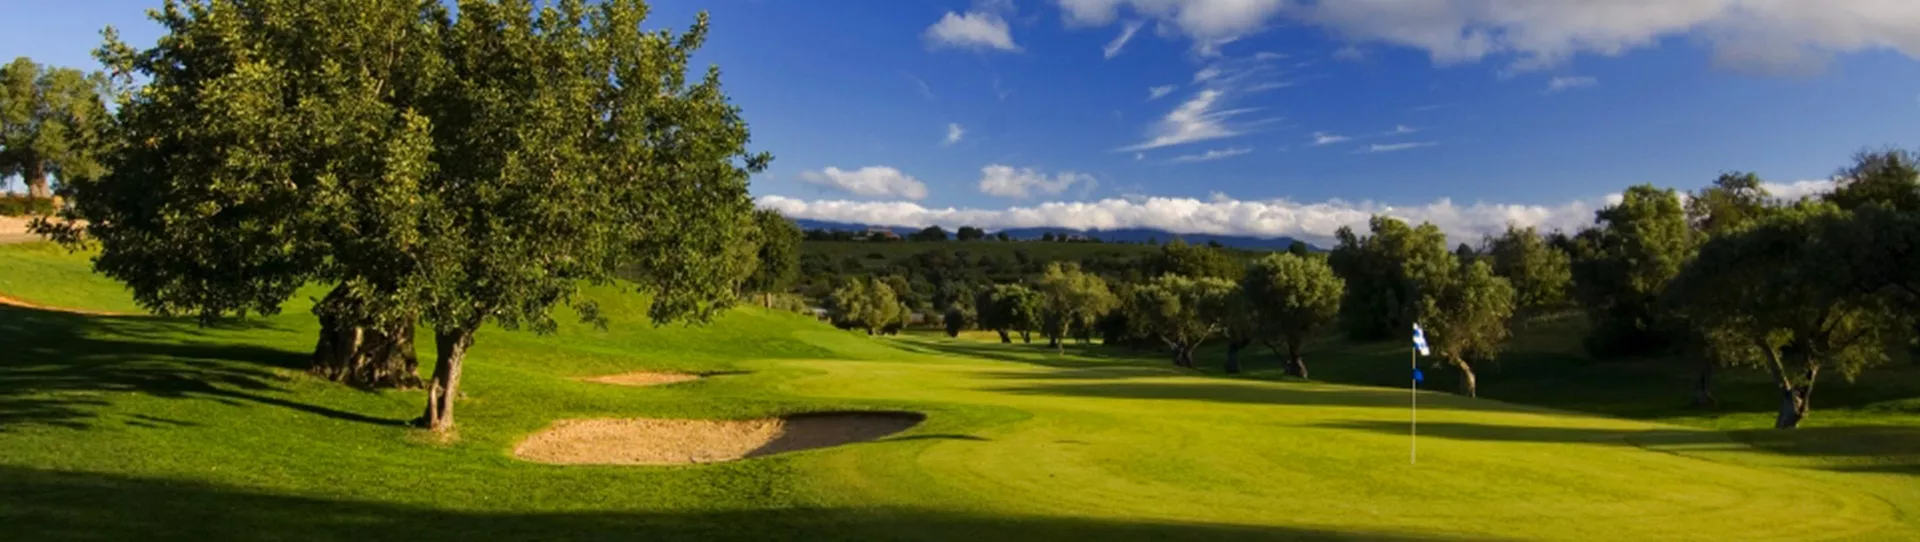 Portugal golf courses - Vale da Pinta Golf Course - Photo 1